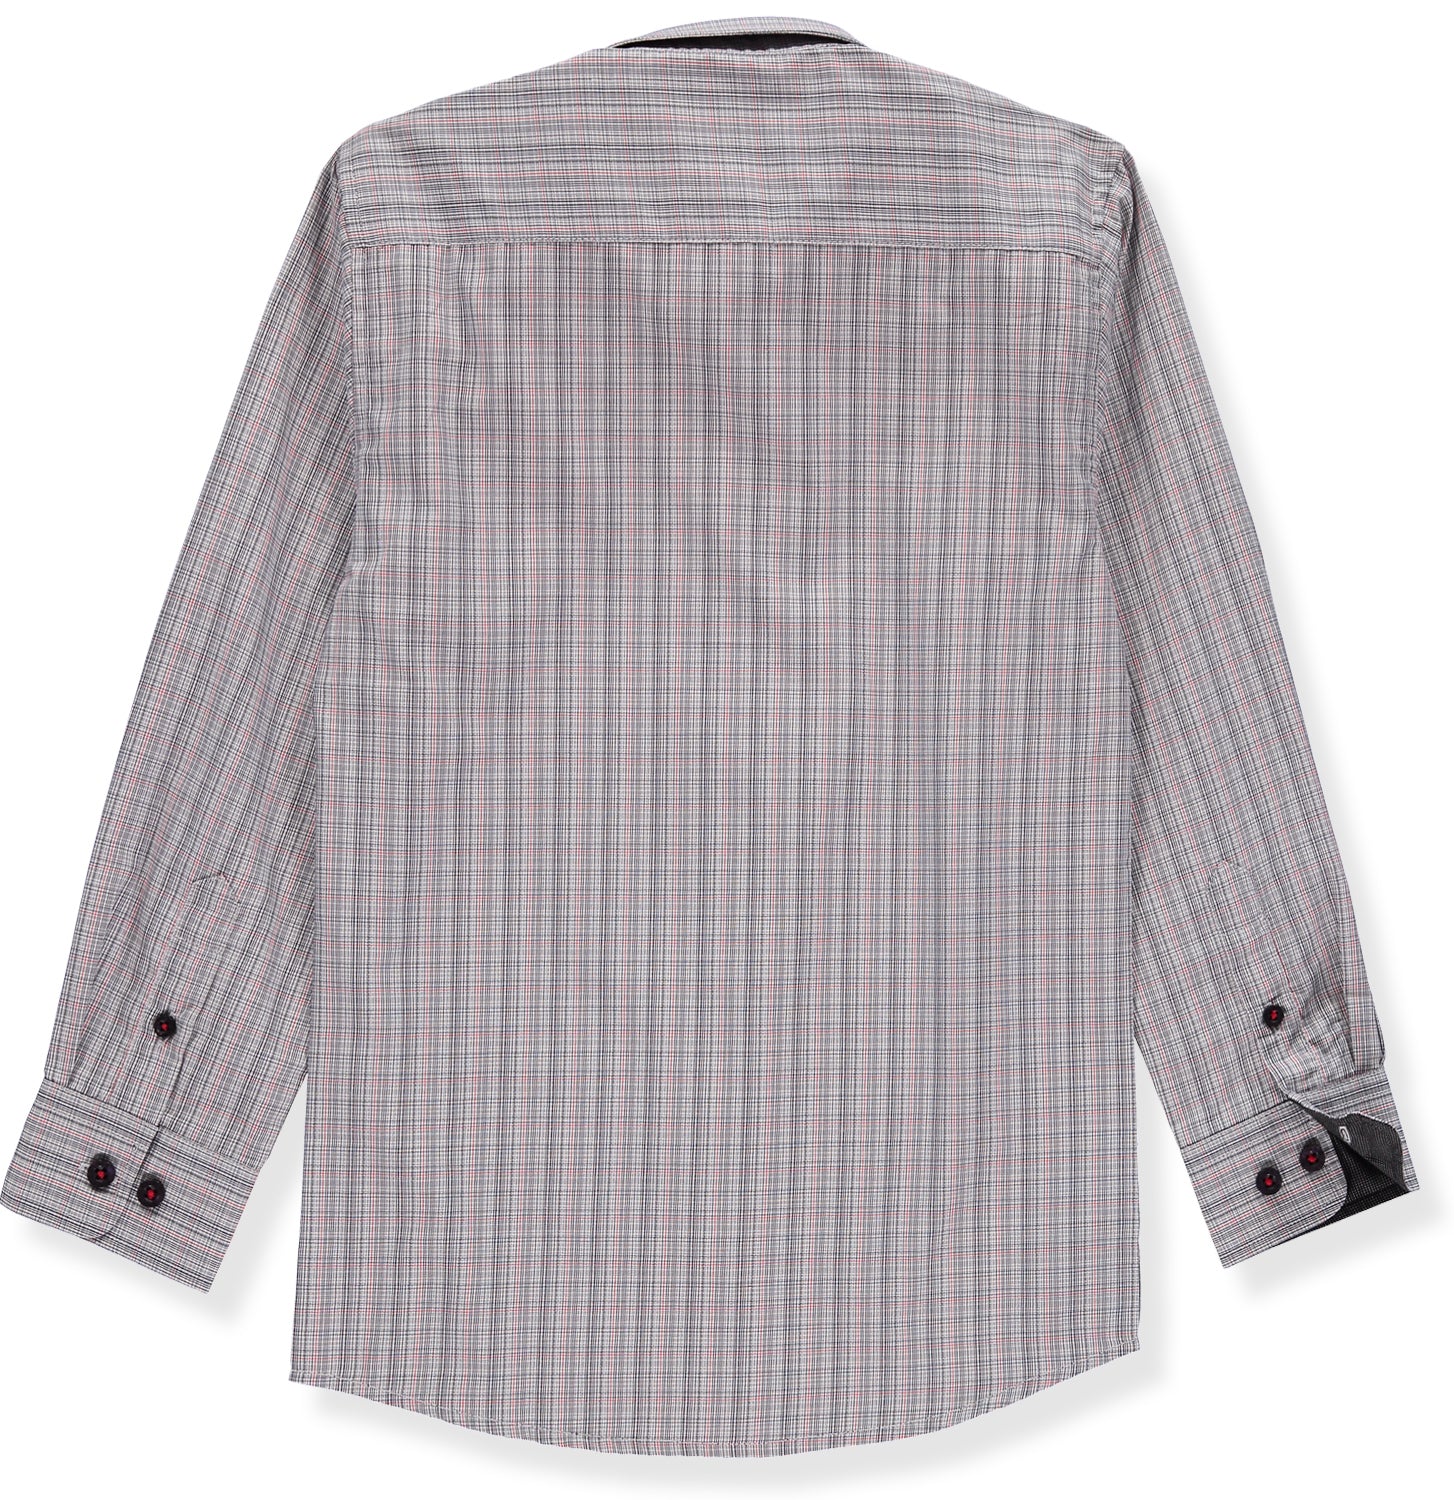 Leo & Zachary Boys 2-16 Sand Tonal Stripe Dress Shirt